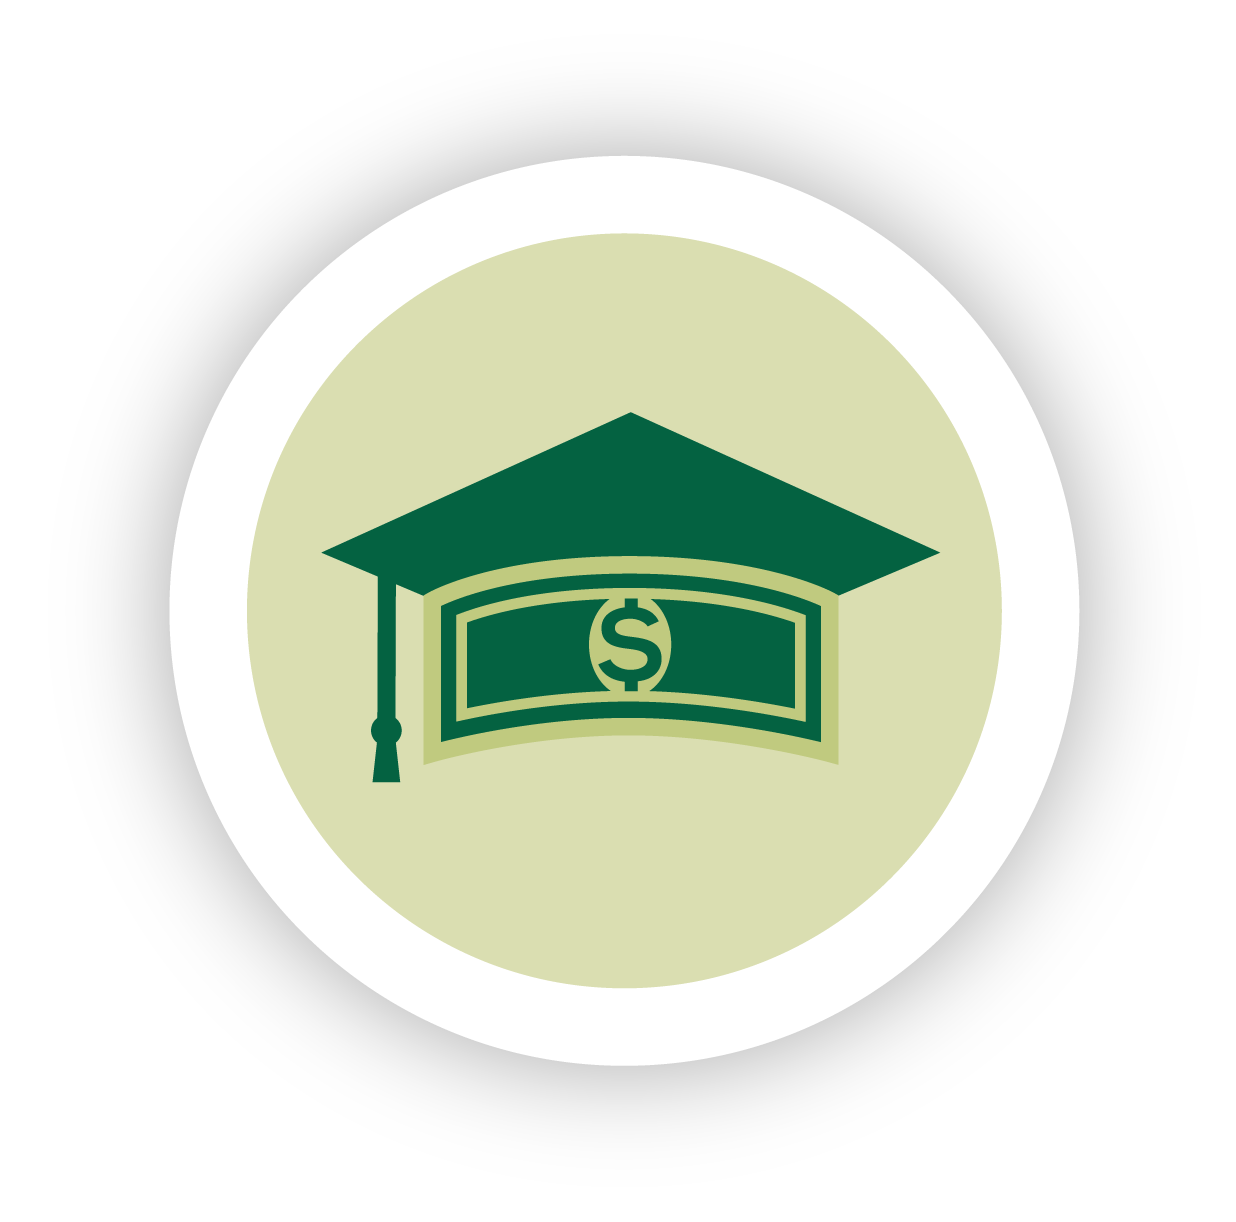 Graduation cap and dollars icon